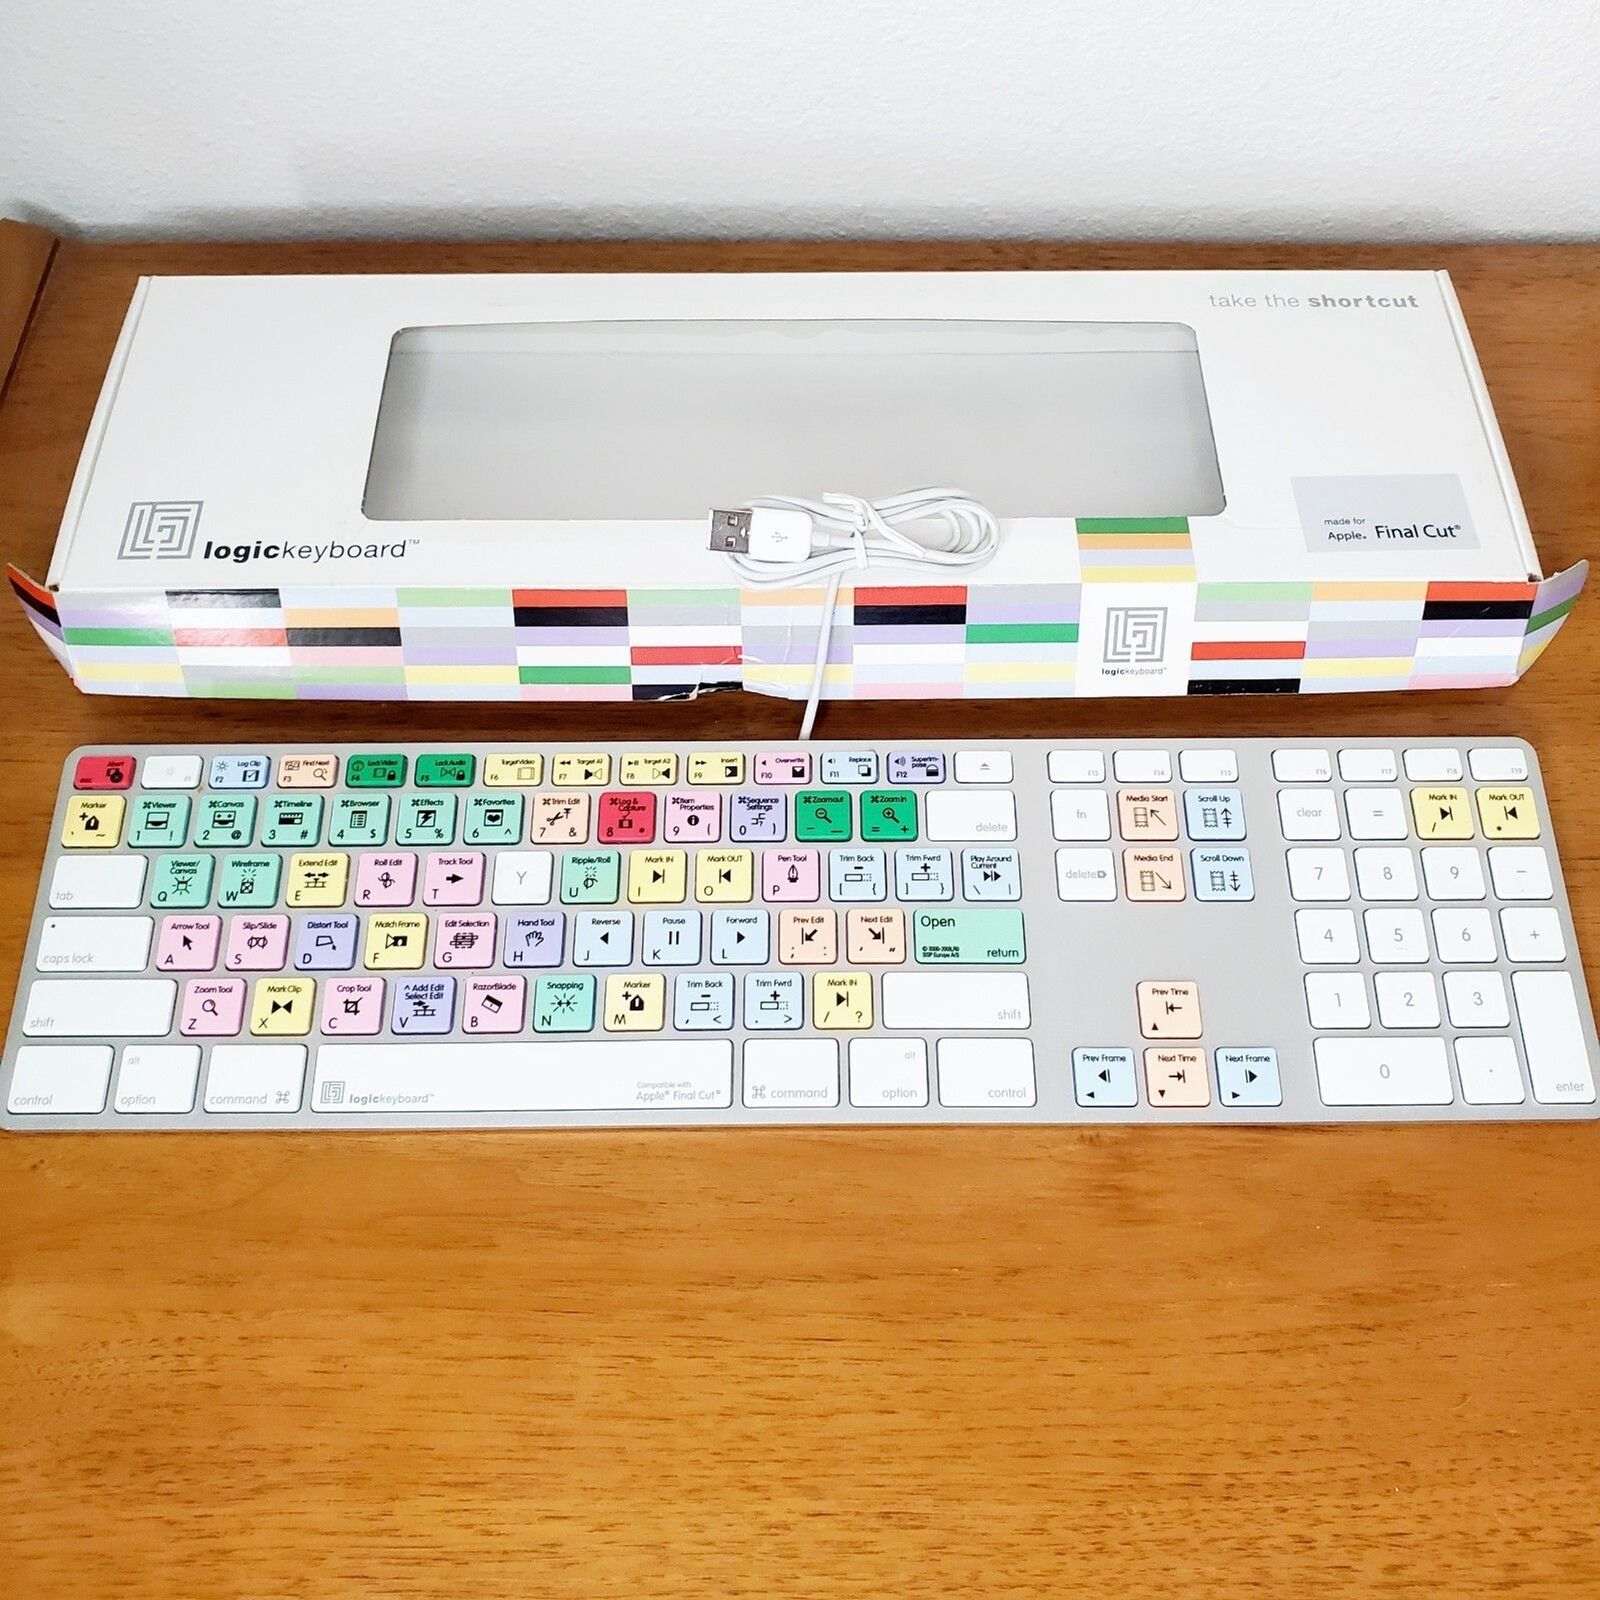 Logic Keyboard Apple Final Cut Pro X Pro Line Computer Wired USB Colored Keys